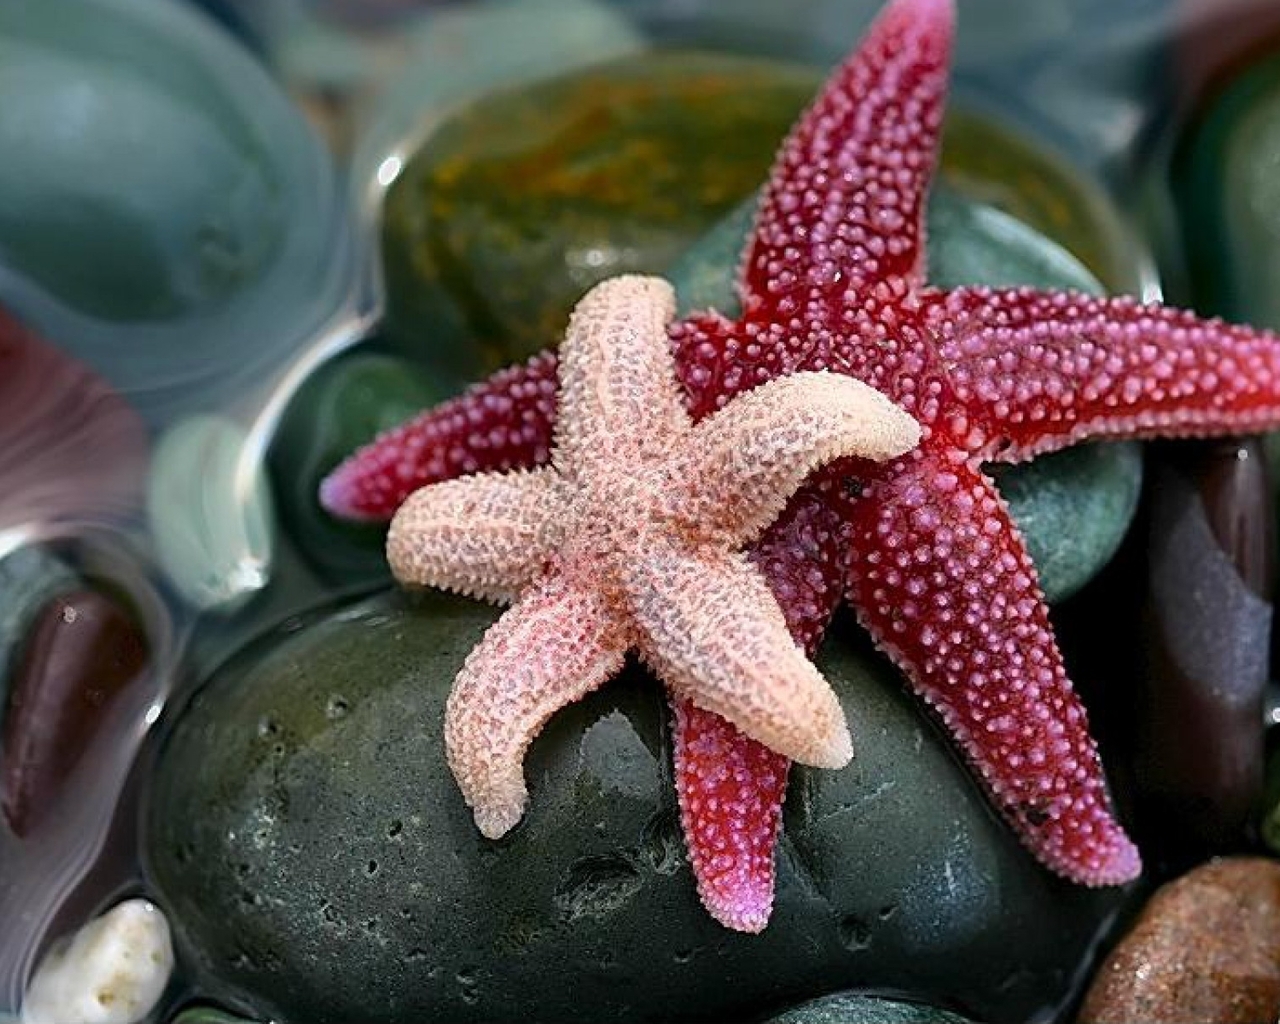 Картинка: Морские звёзды, камни, галька